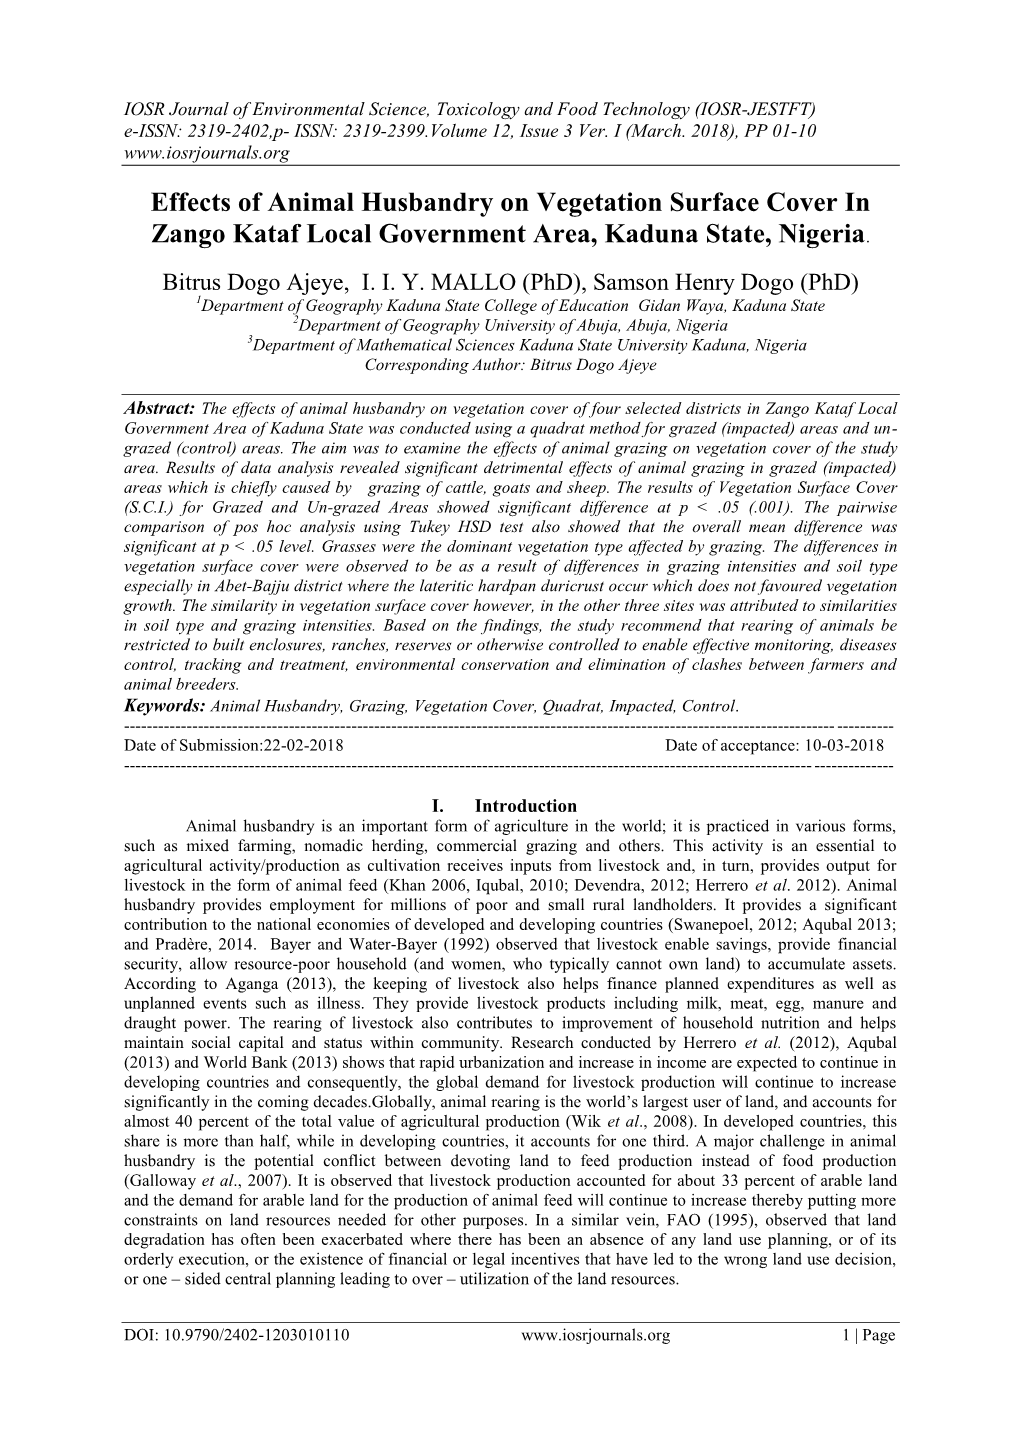 Effects of Animal Husbandry on Vegetation Surface Cover in Zango Kataf Local Government Area, Kaduna State, Nigeria